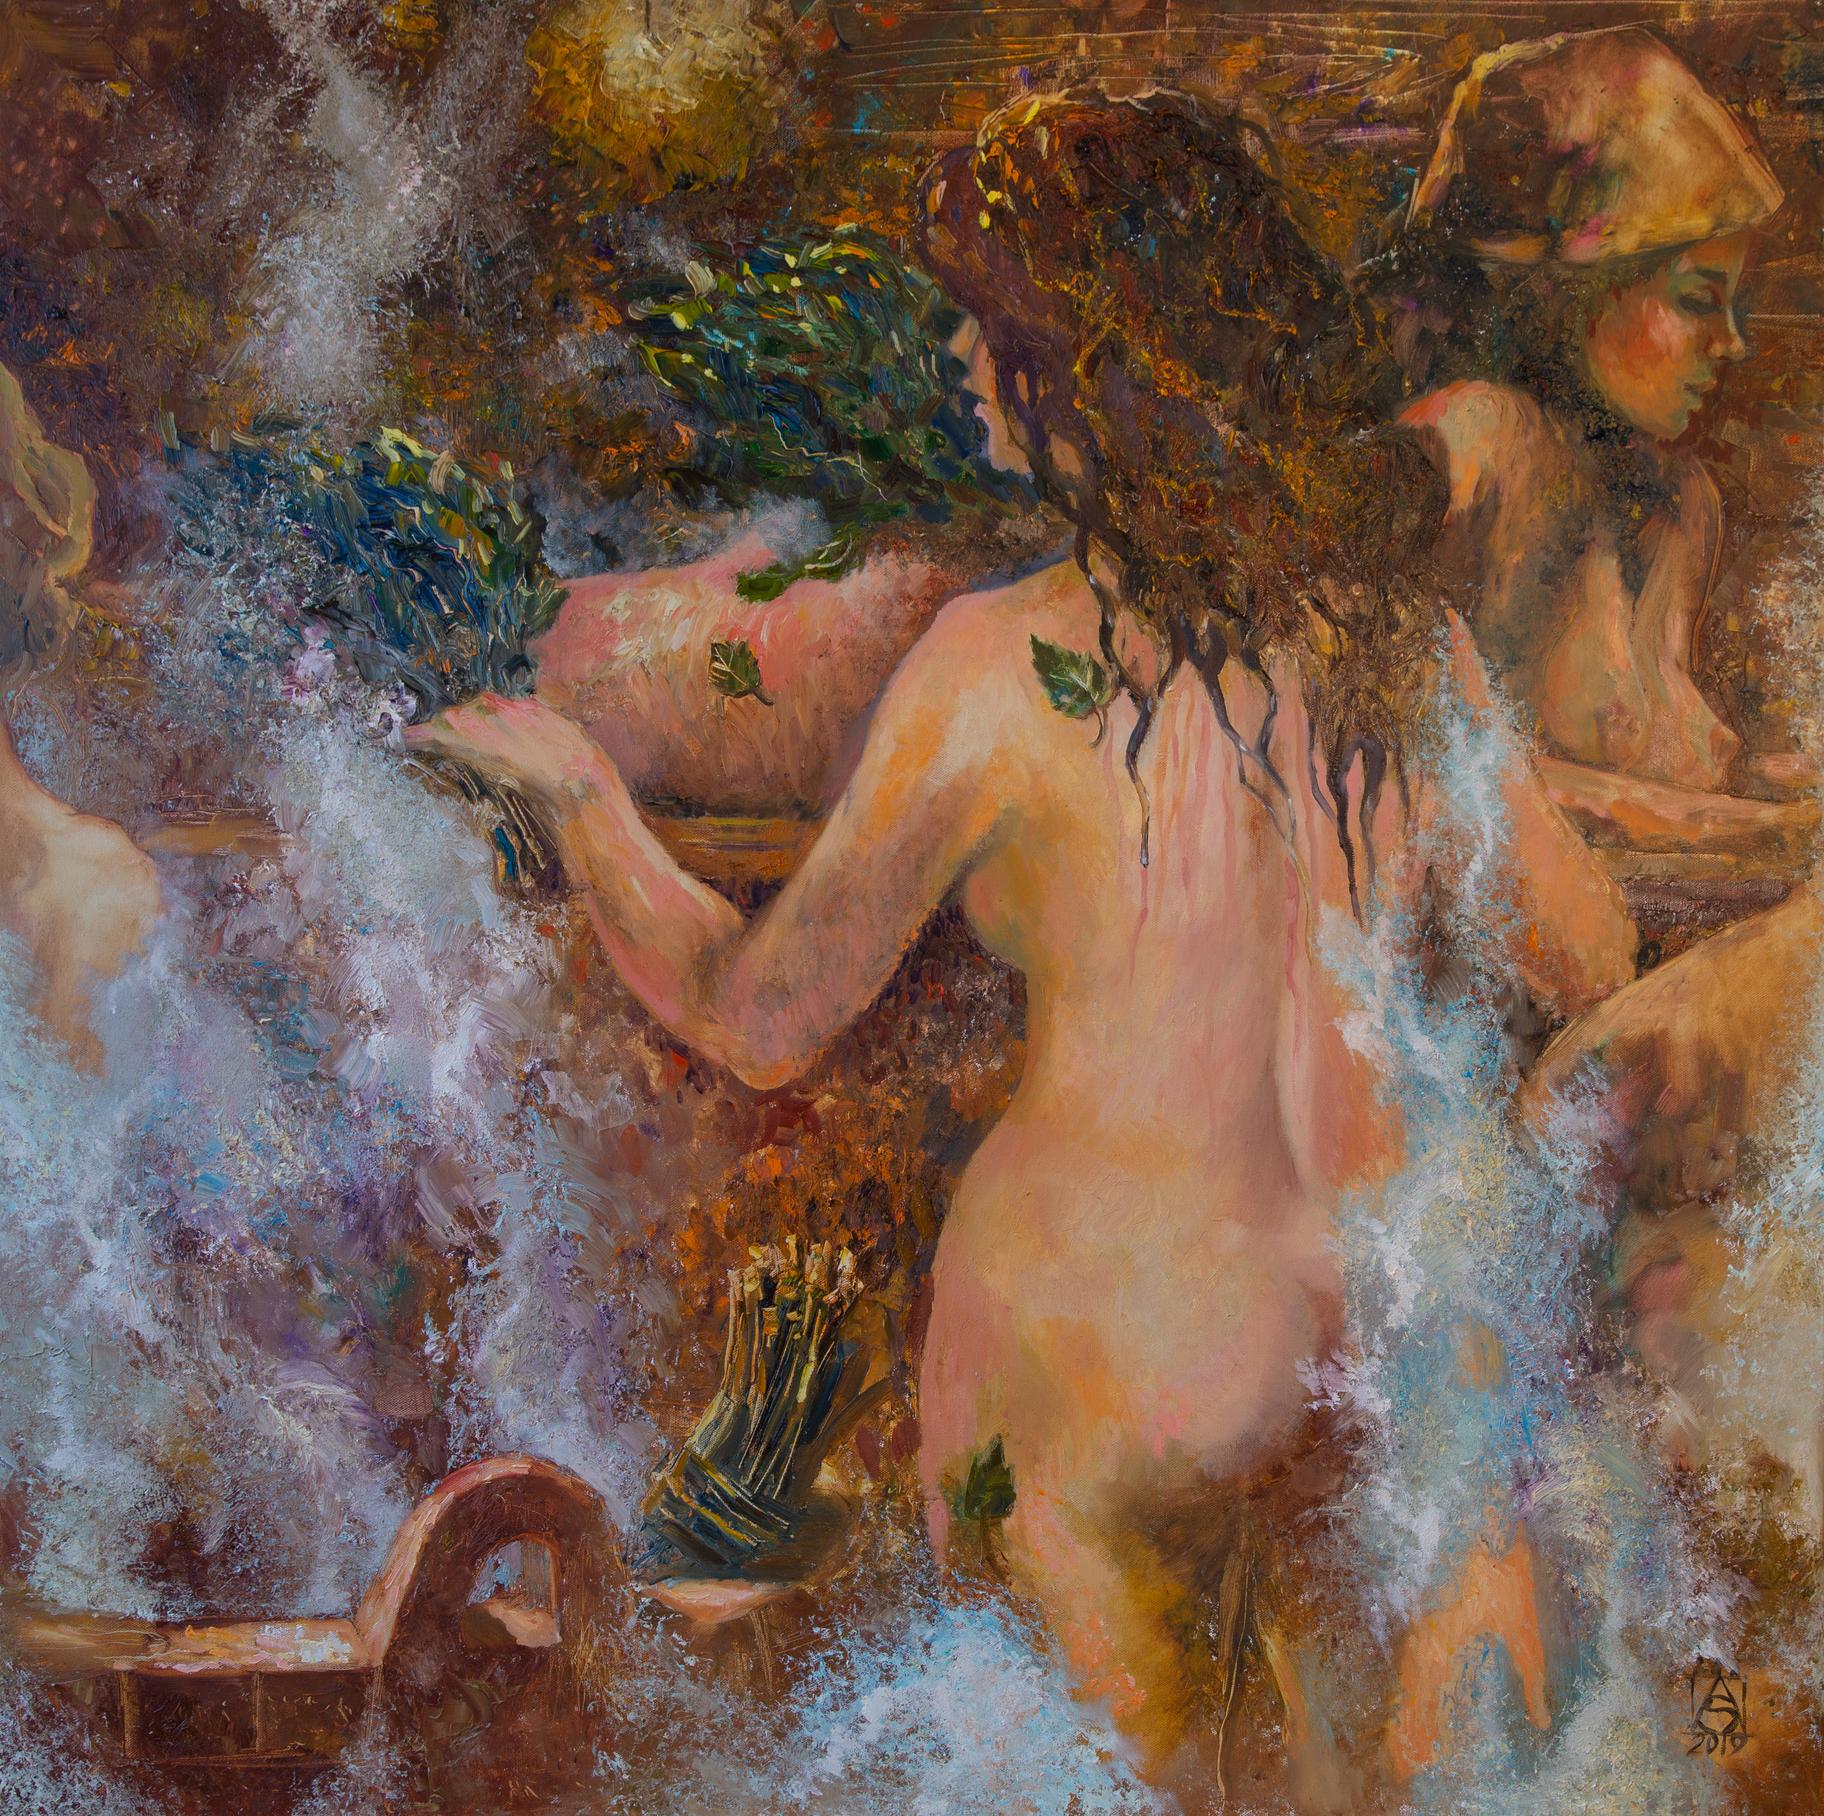 Anna Shesterikova Nude Painting - In a Bath-house